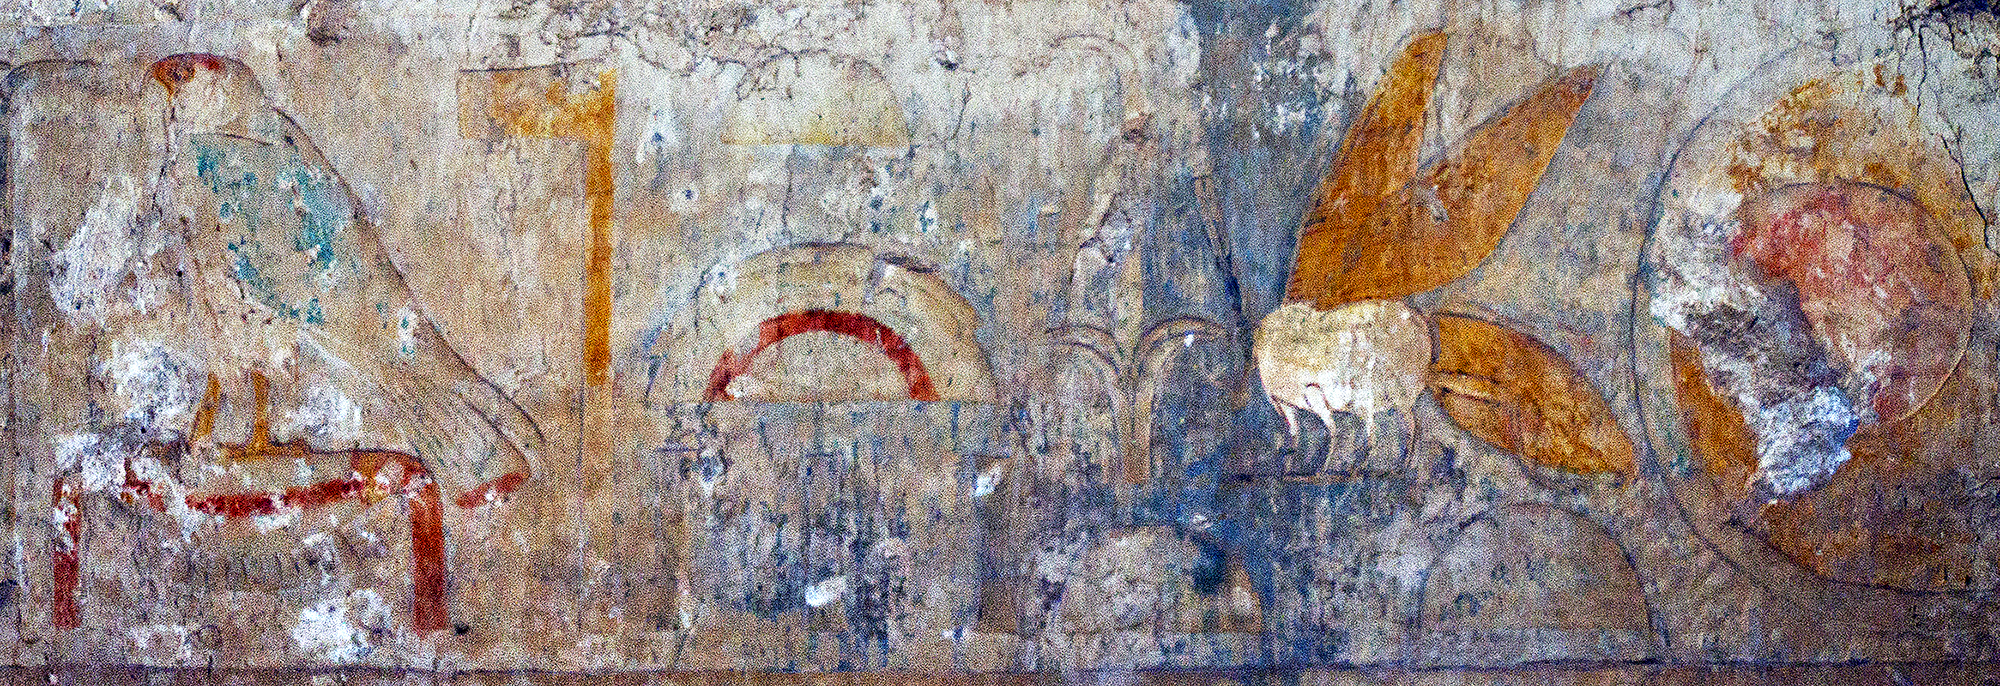 Detail of Hieroglyphics